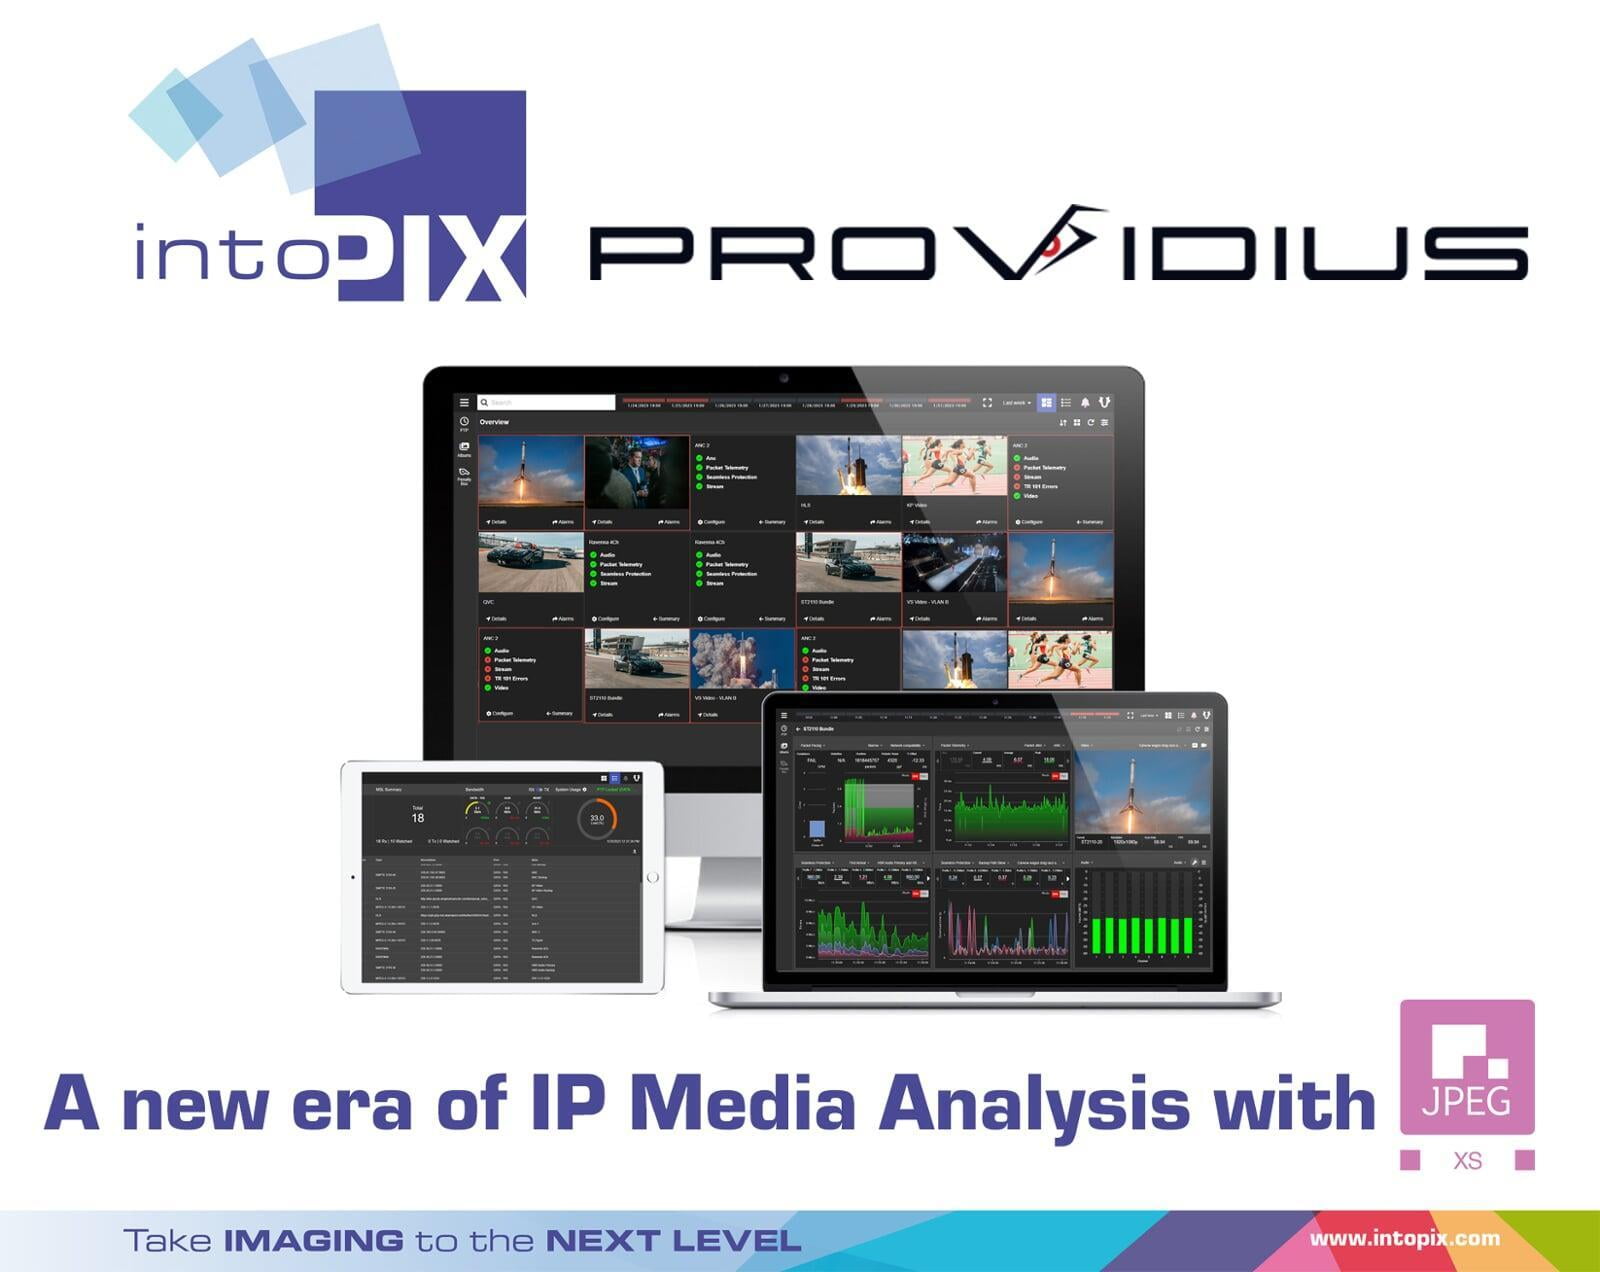 The game-changing addition of intoPIX JPEG XS codec by Providius heralds a new era of IP media analysis